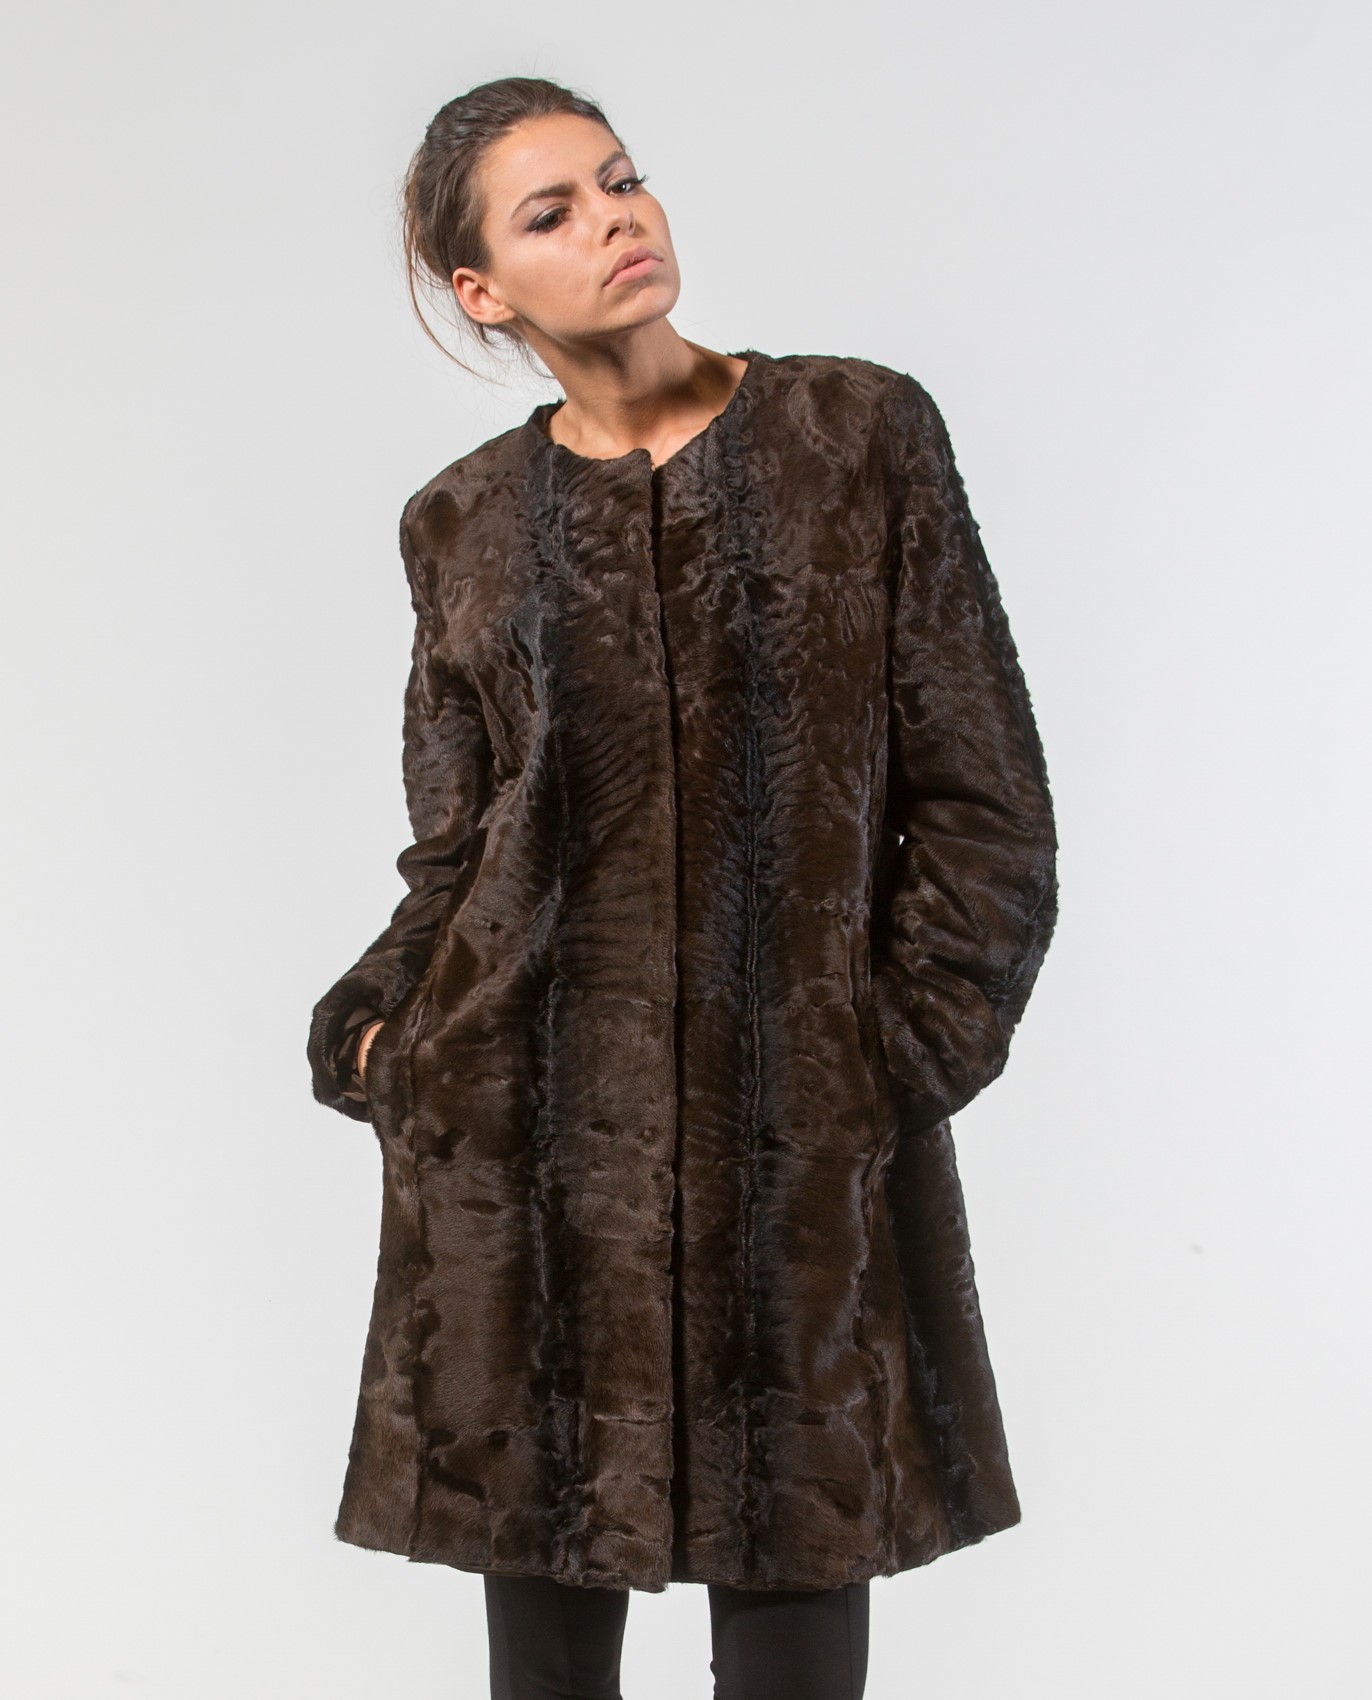 Dark Brown Astrakhan Fur Jacket. 100% Real Fur Coats and Accessories.